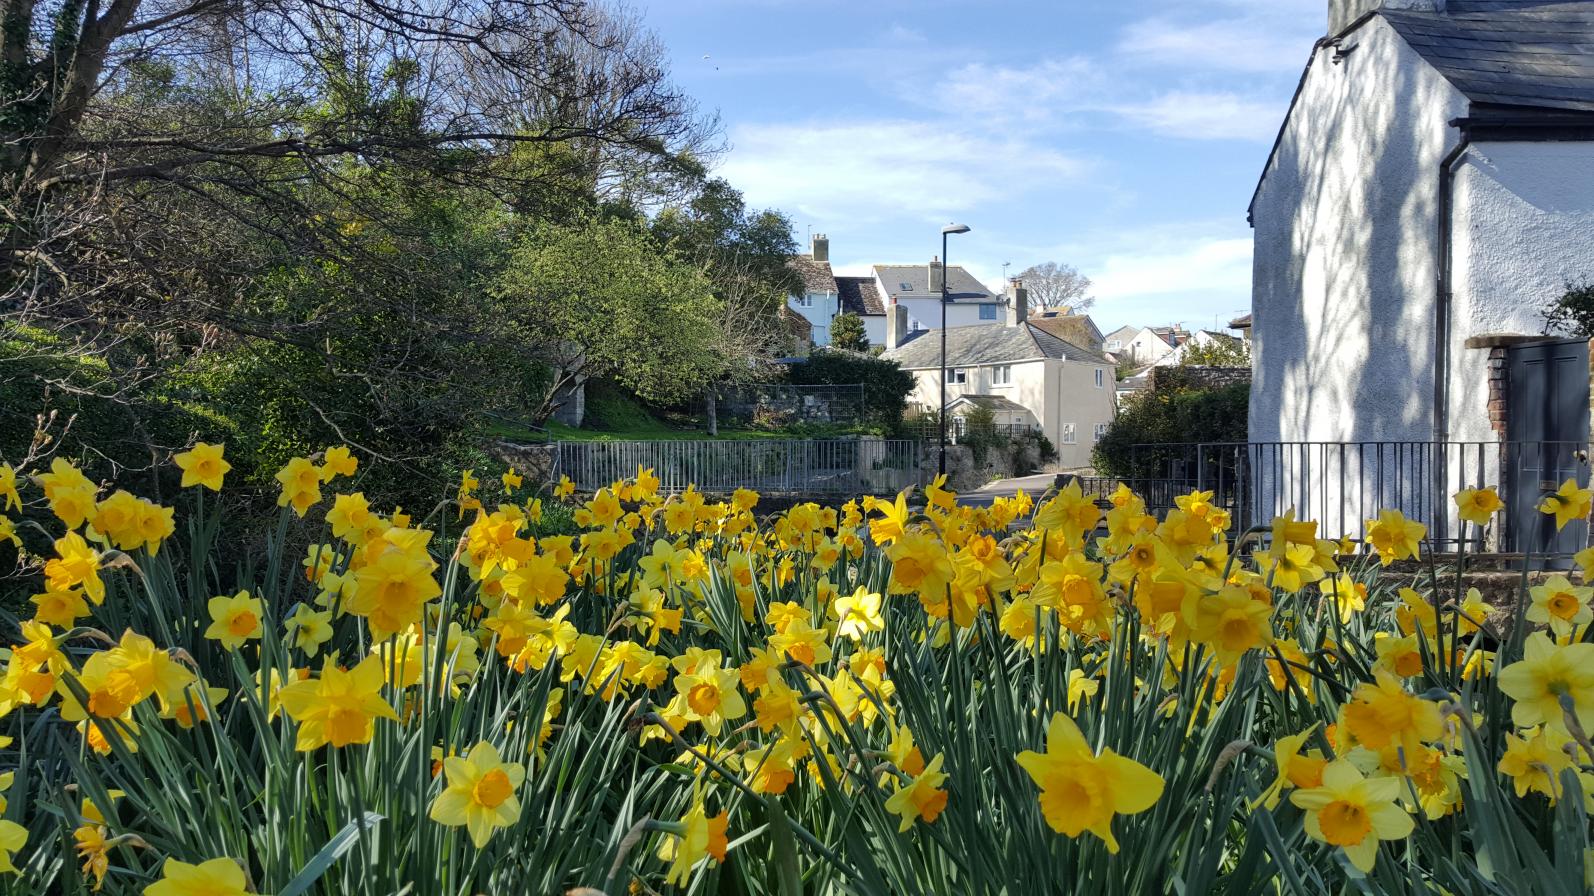 Daffodils along the River Lym path